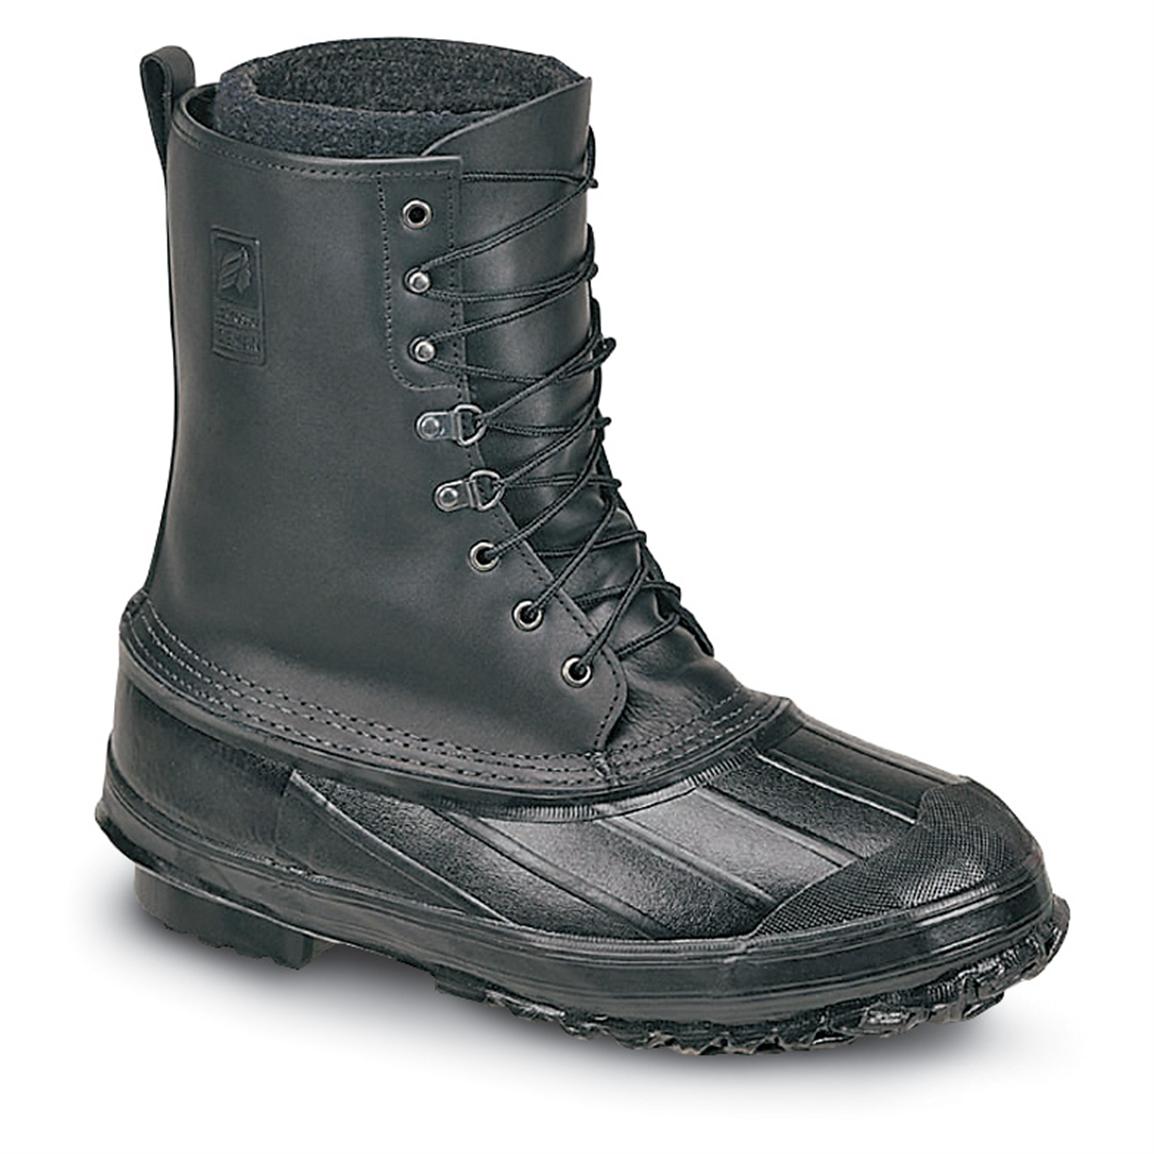 Buy > lacrosse iceman boot liners > in stock